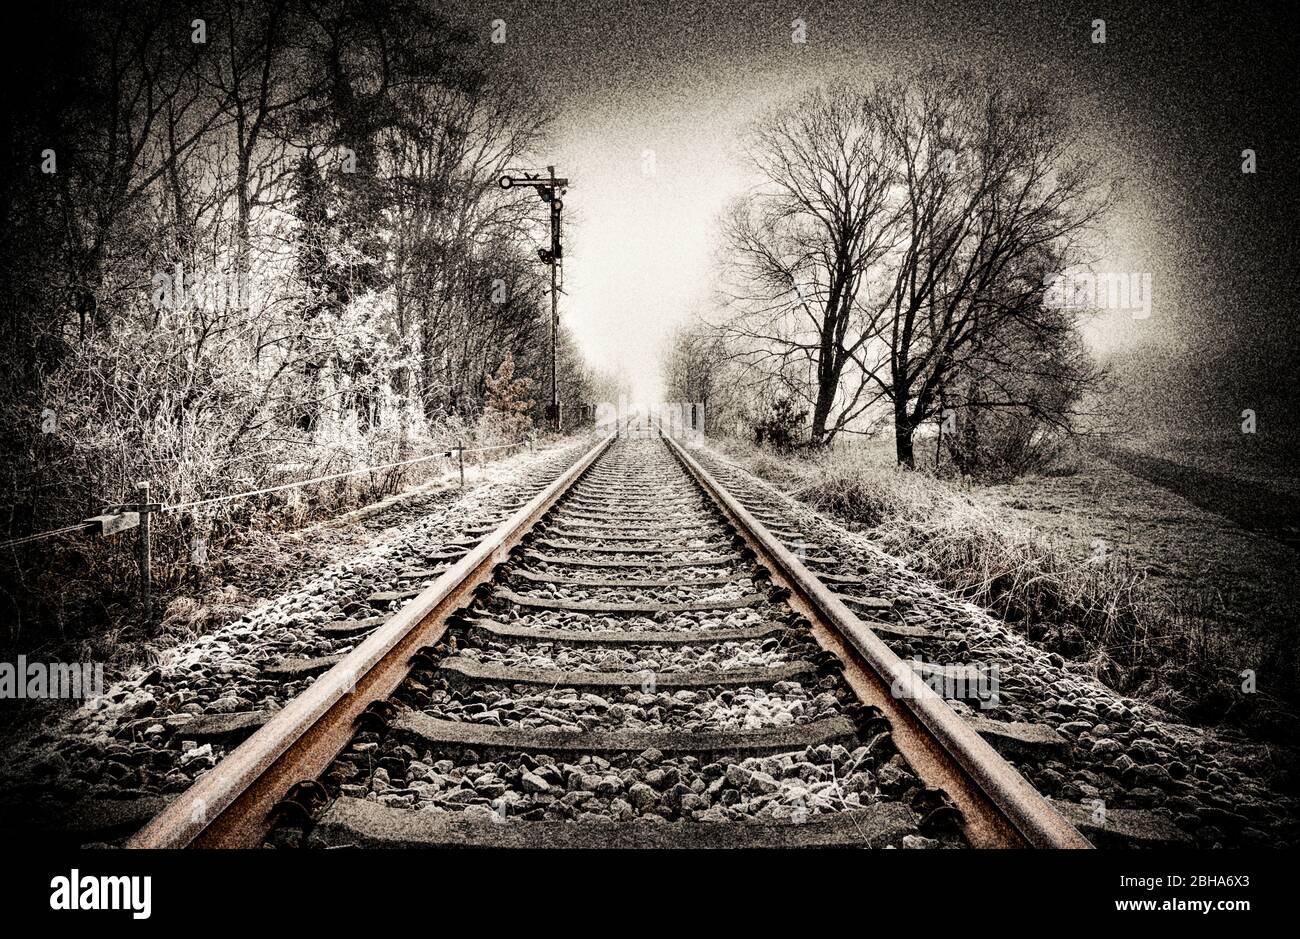 Signal, track, fog, hoarfrost, backlight, digitally processed, RailArt Stock Photo